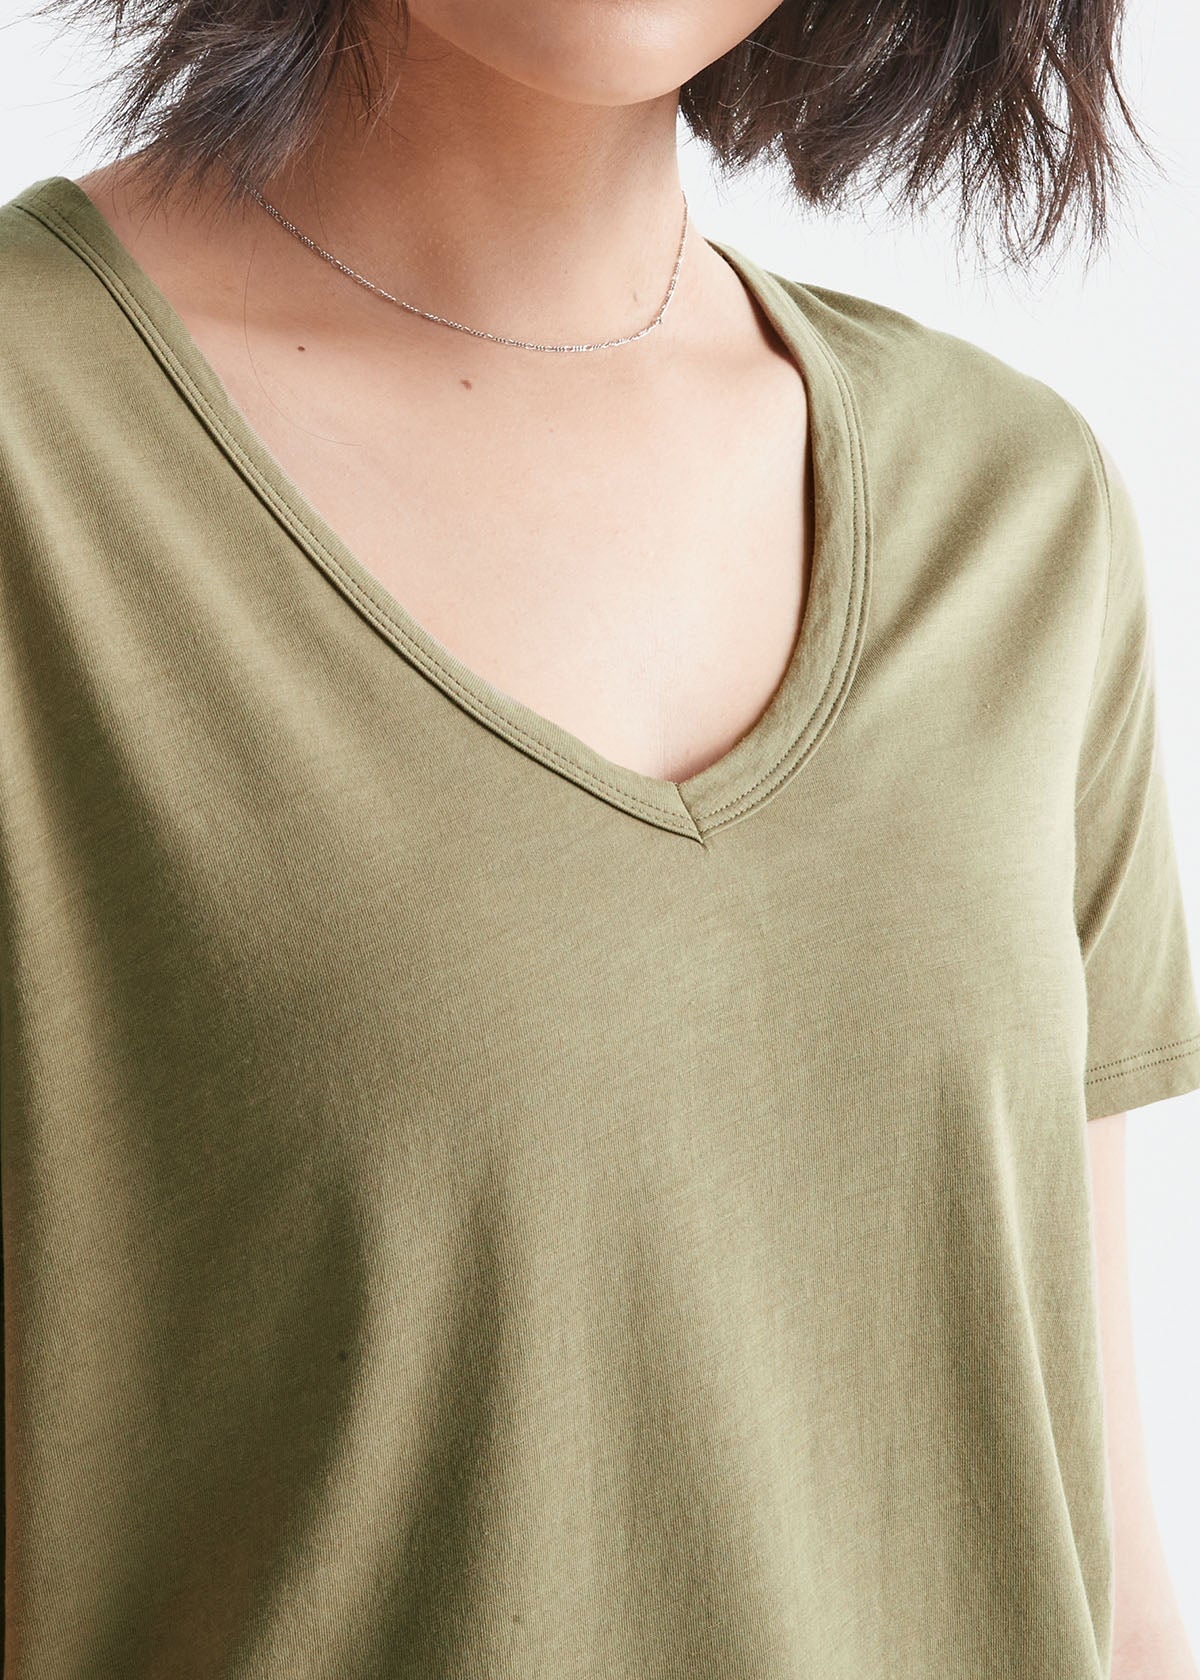 womens soft light-weight olive v-neck t-shirt neckline detail